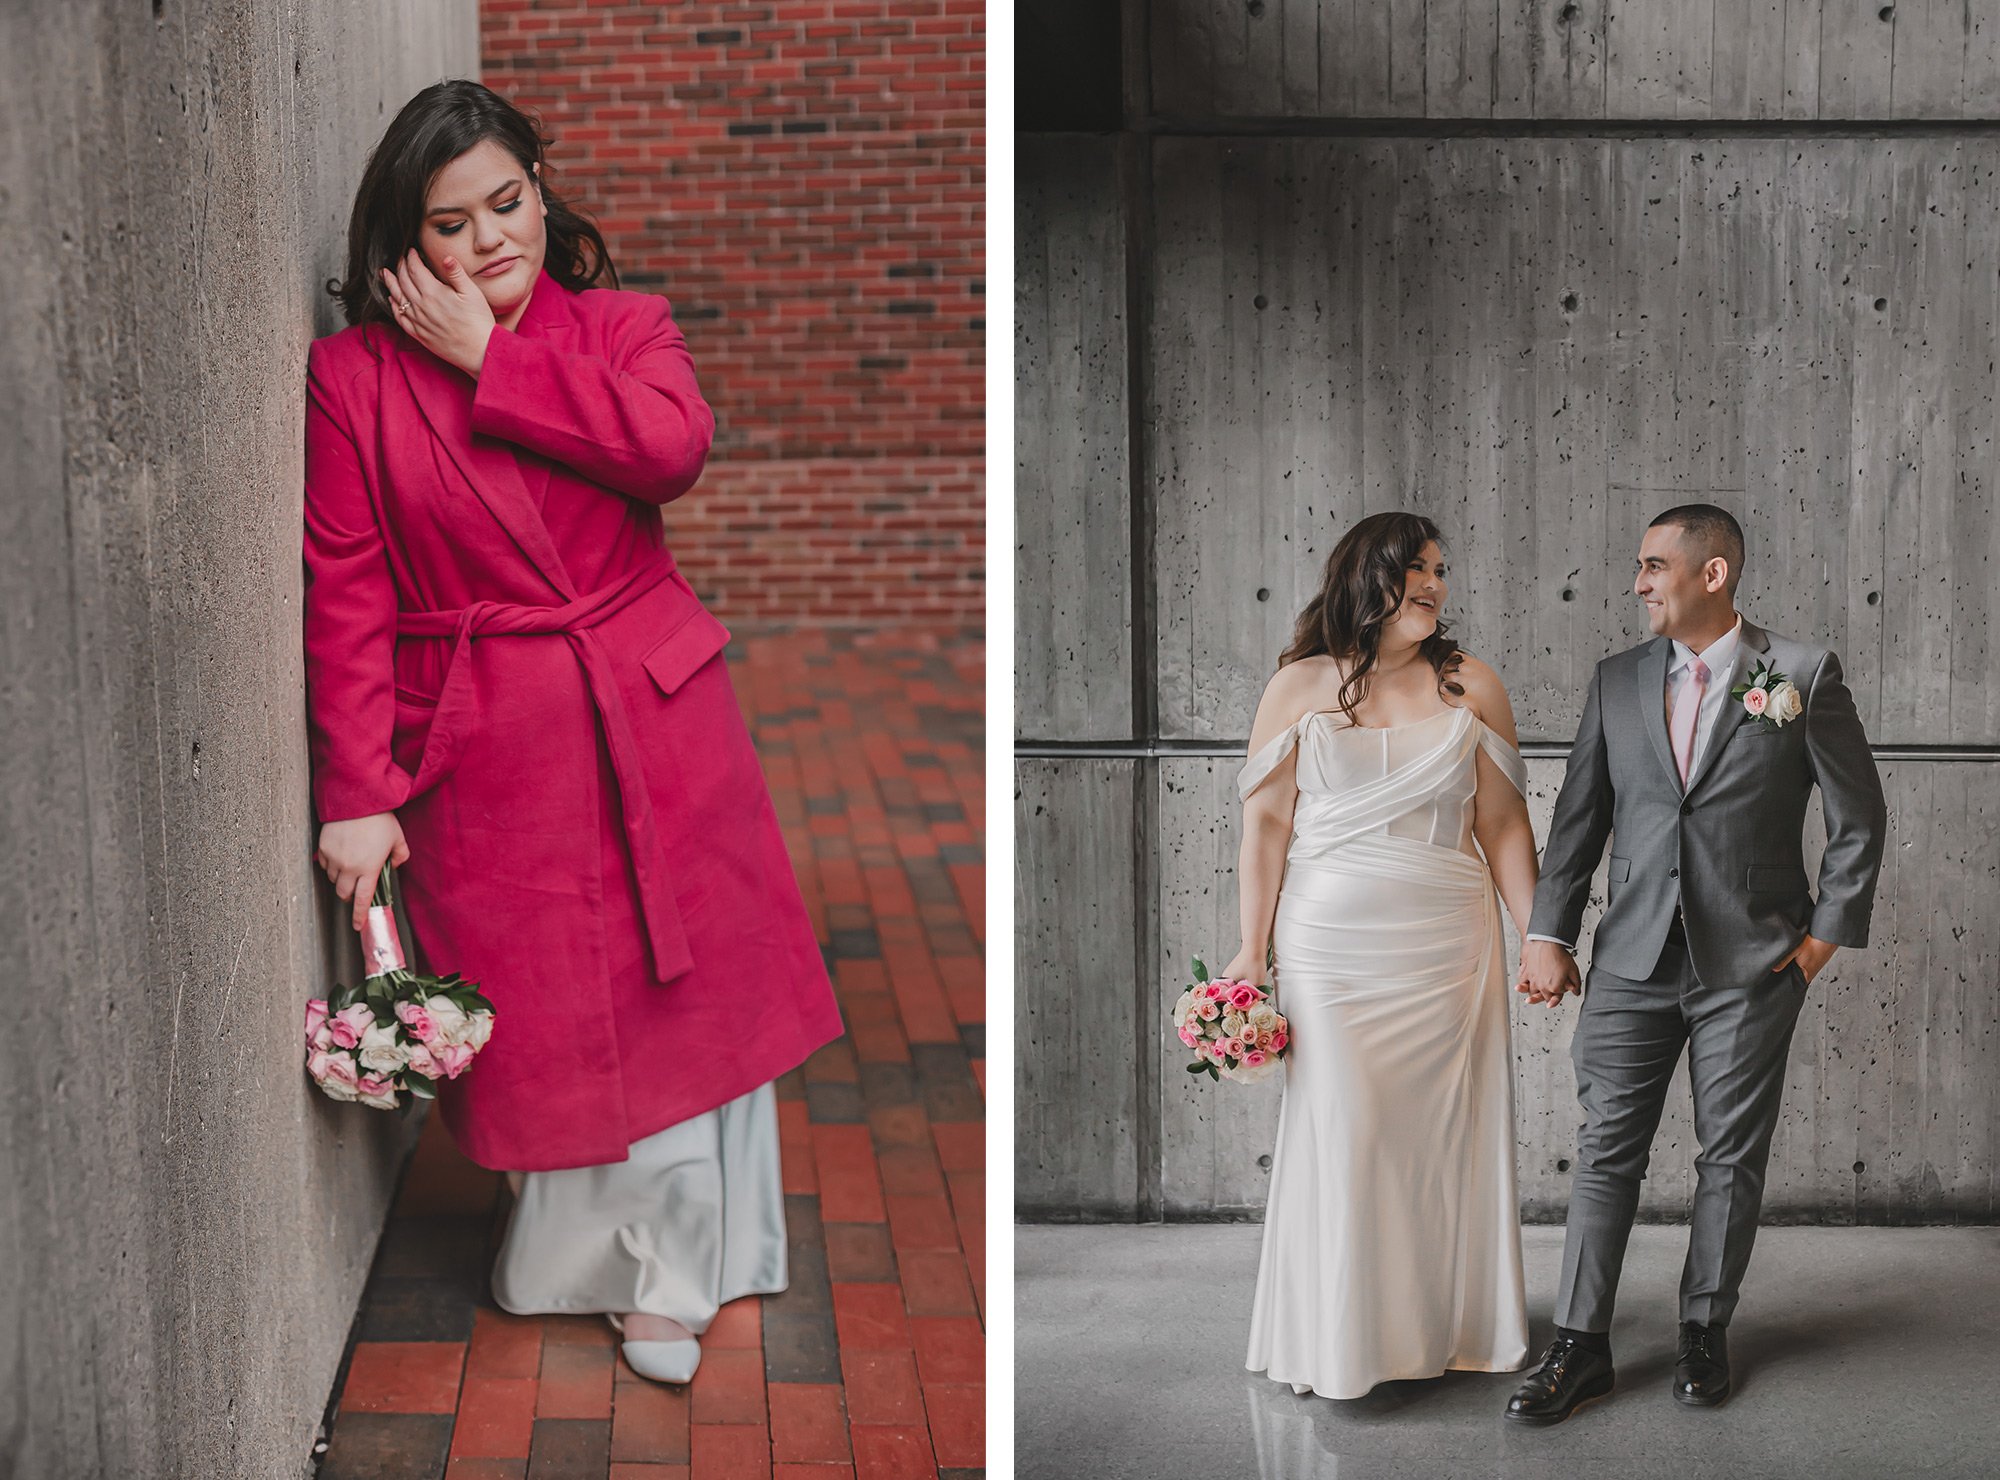 Boston City Hall Marriage | Stephen Grant Photography